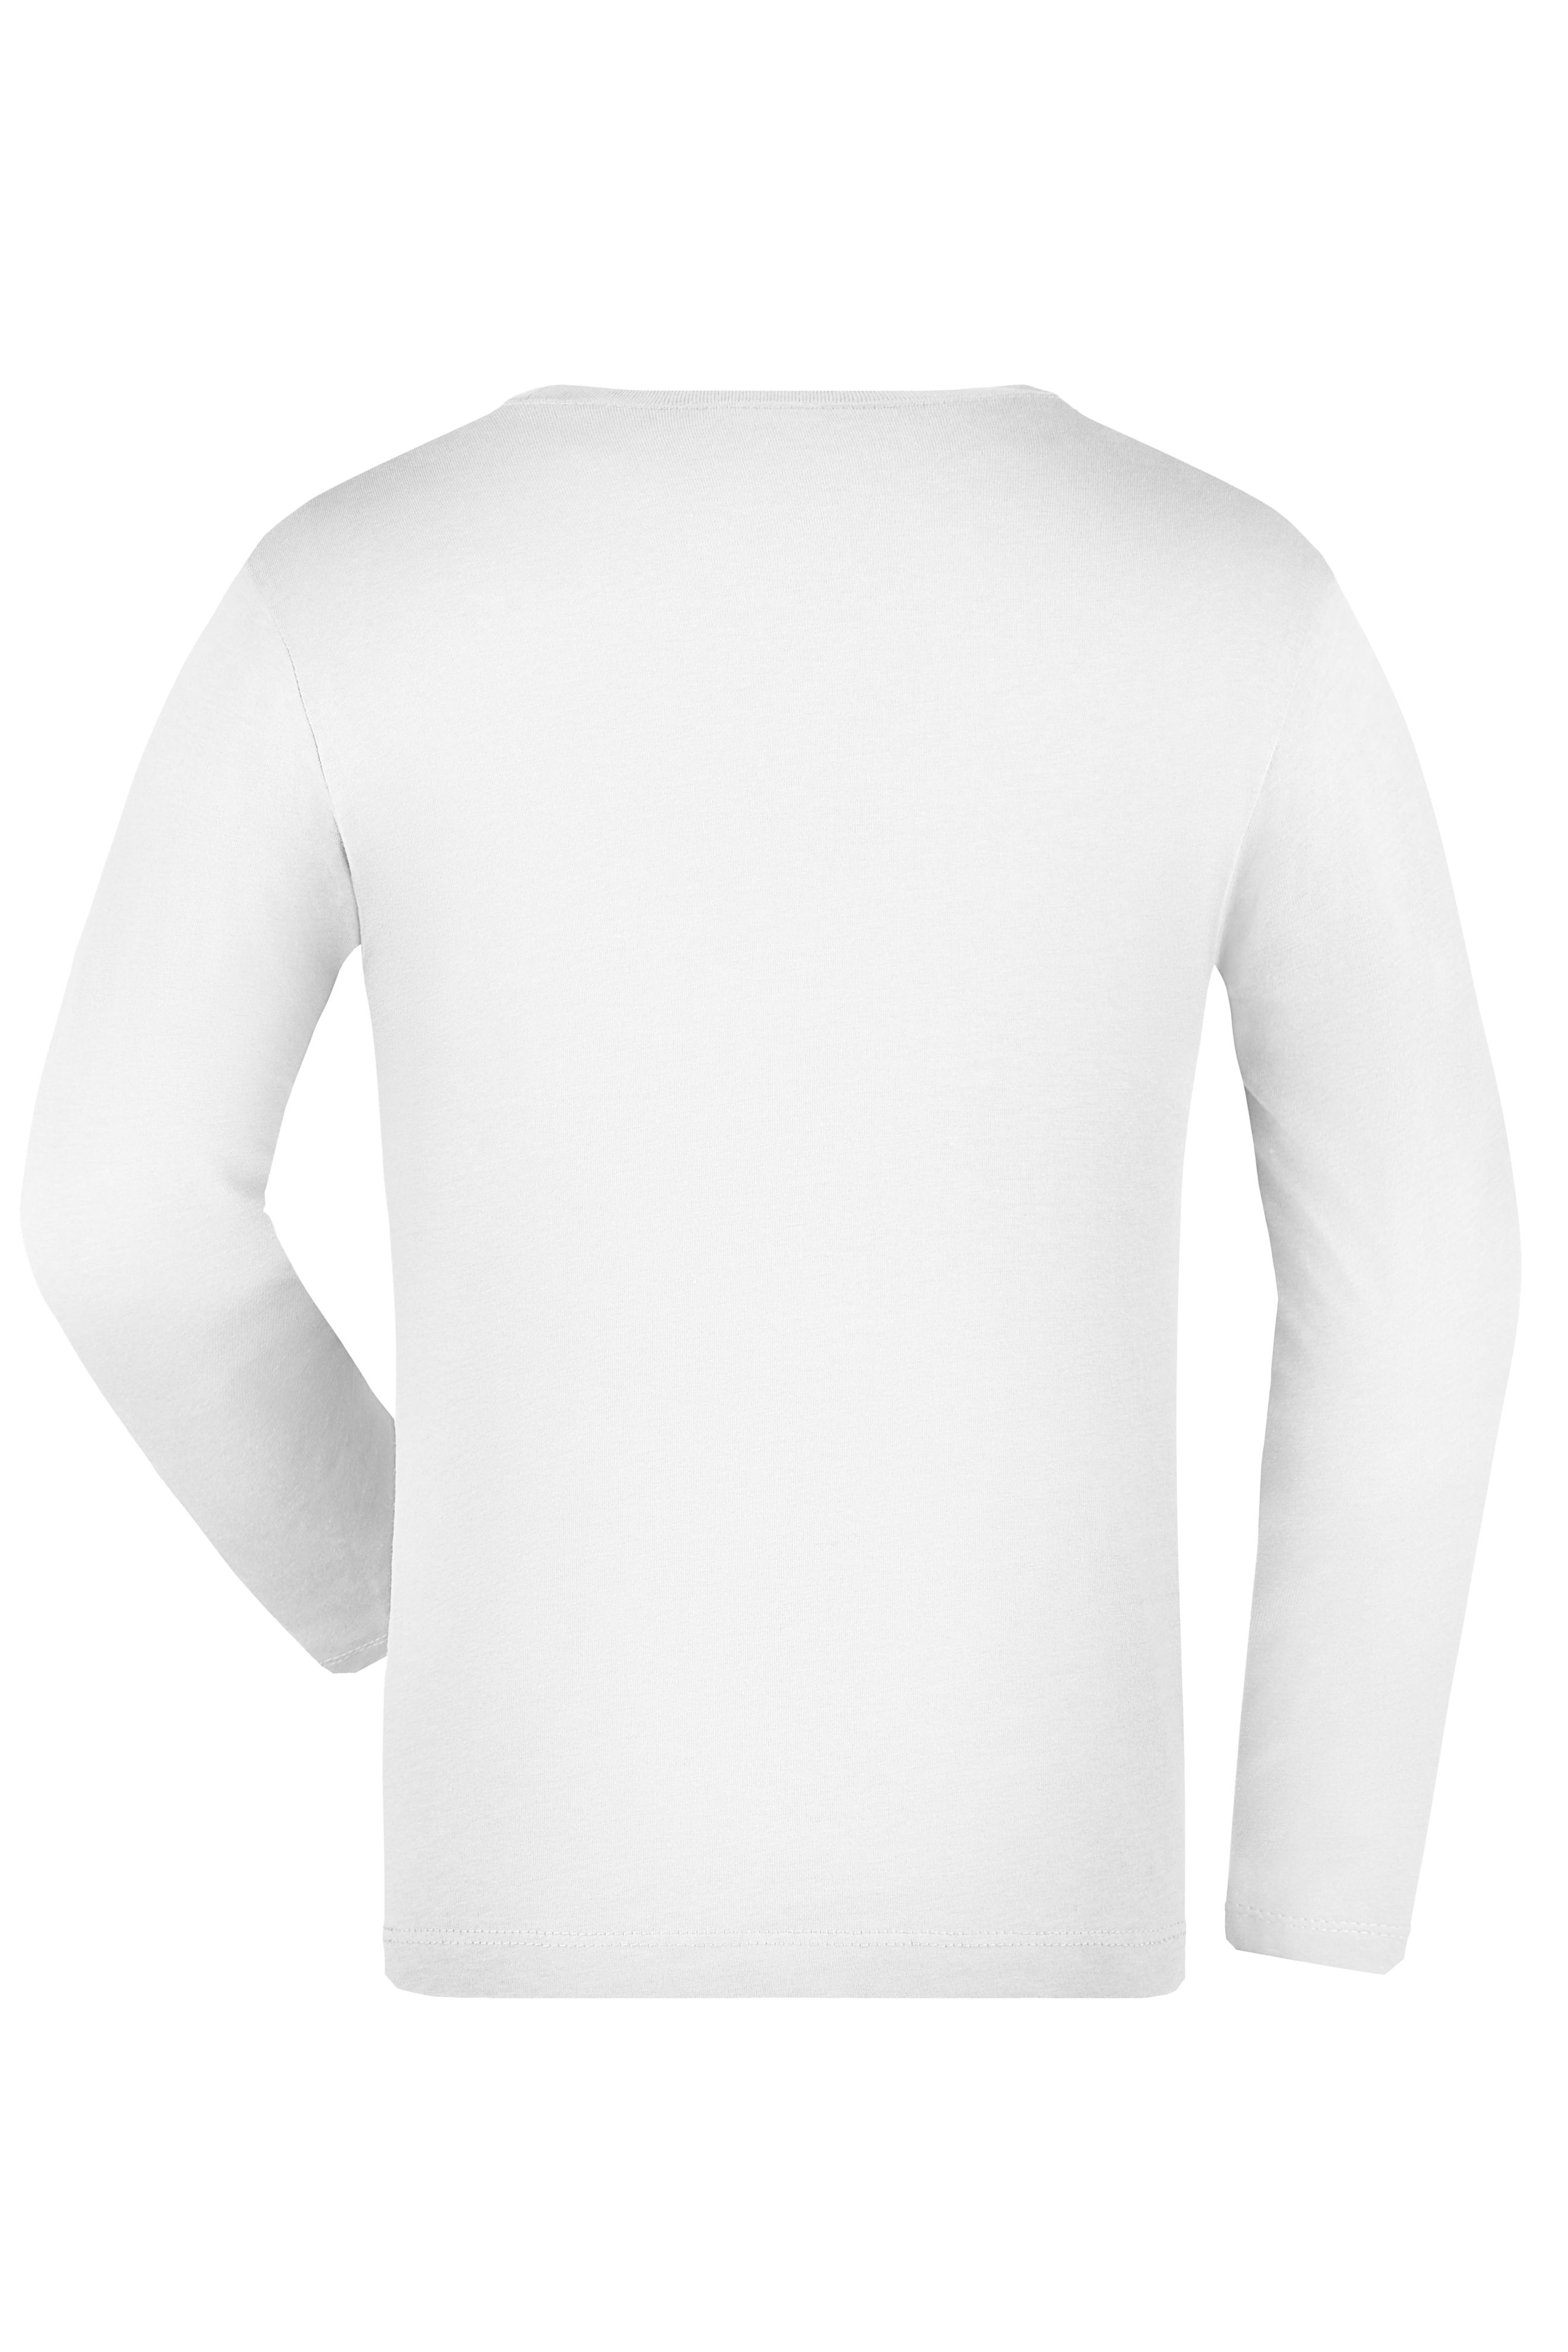 Kids Junior Shirt Long-Sleeved Medium White-Daiber